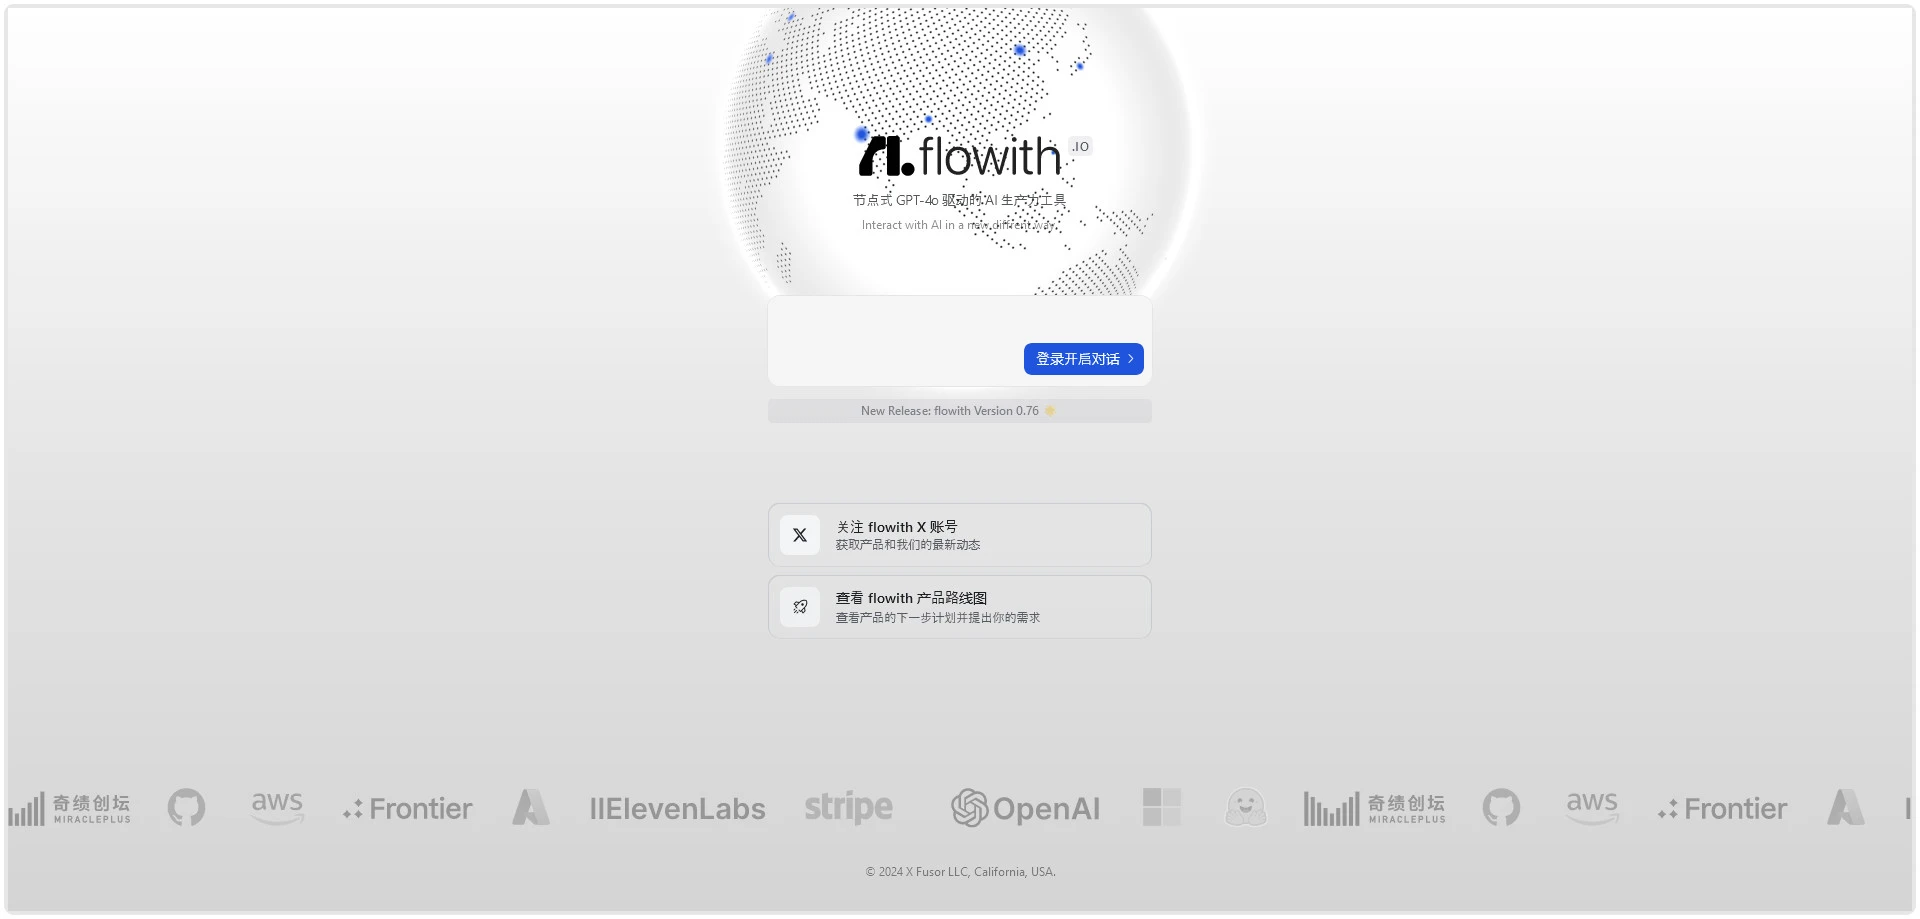 AI工具与服务推荐 - flowith - AI生产力工具 - 特色图片